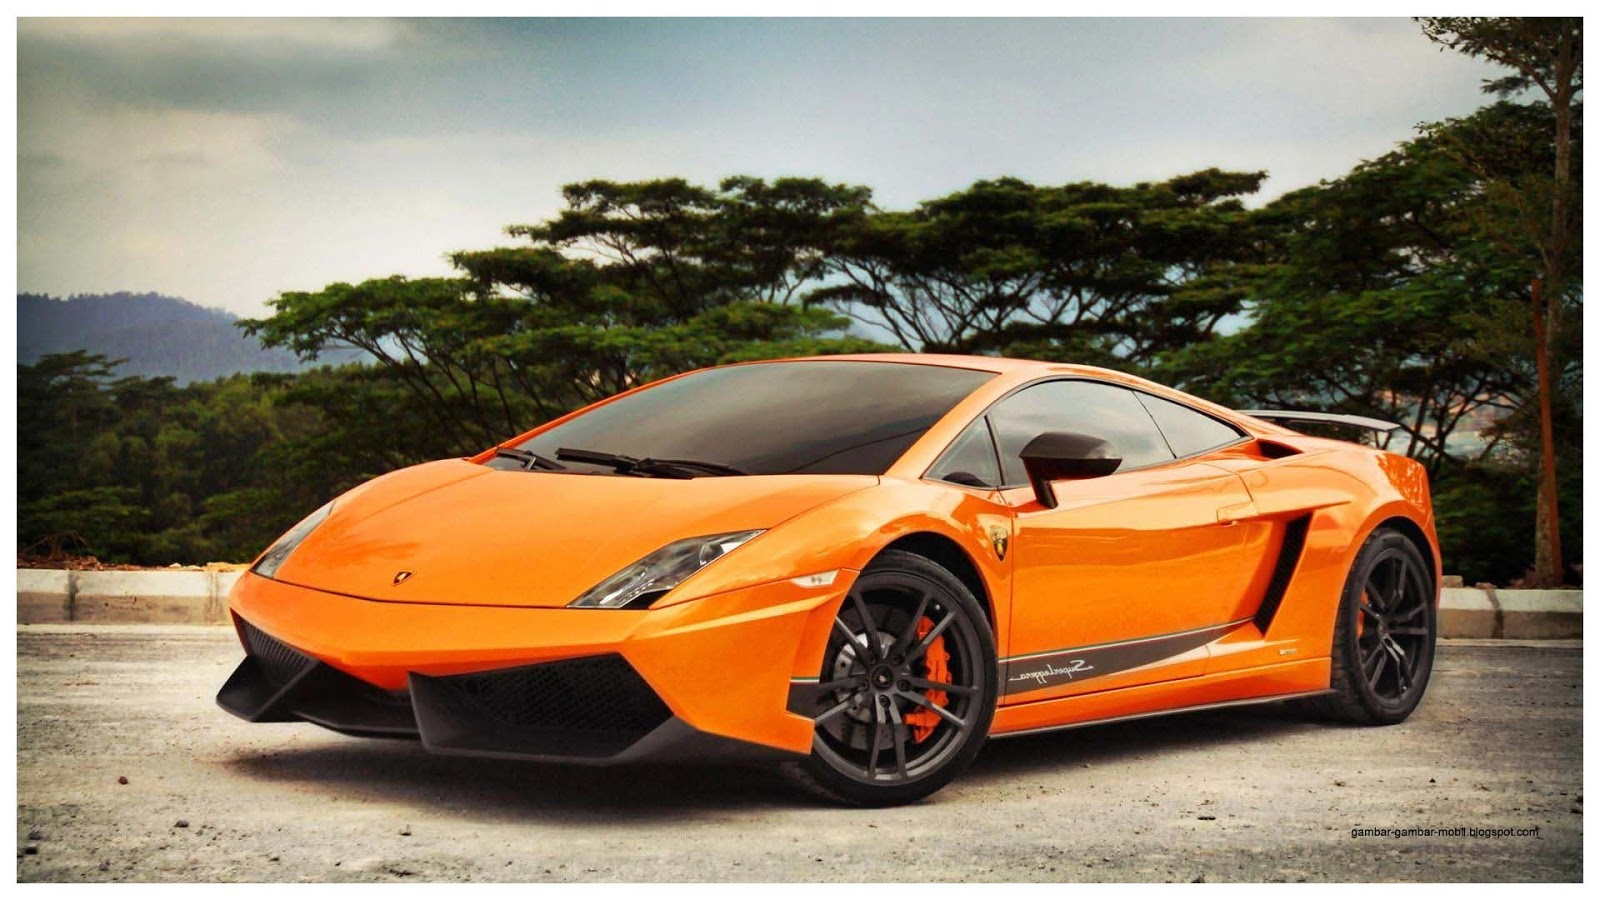 Mobil Lamborghini Supercar Dengan Pesona Dan Kecepatan Yang